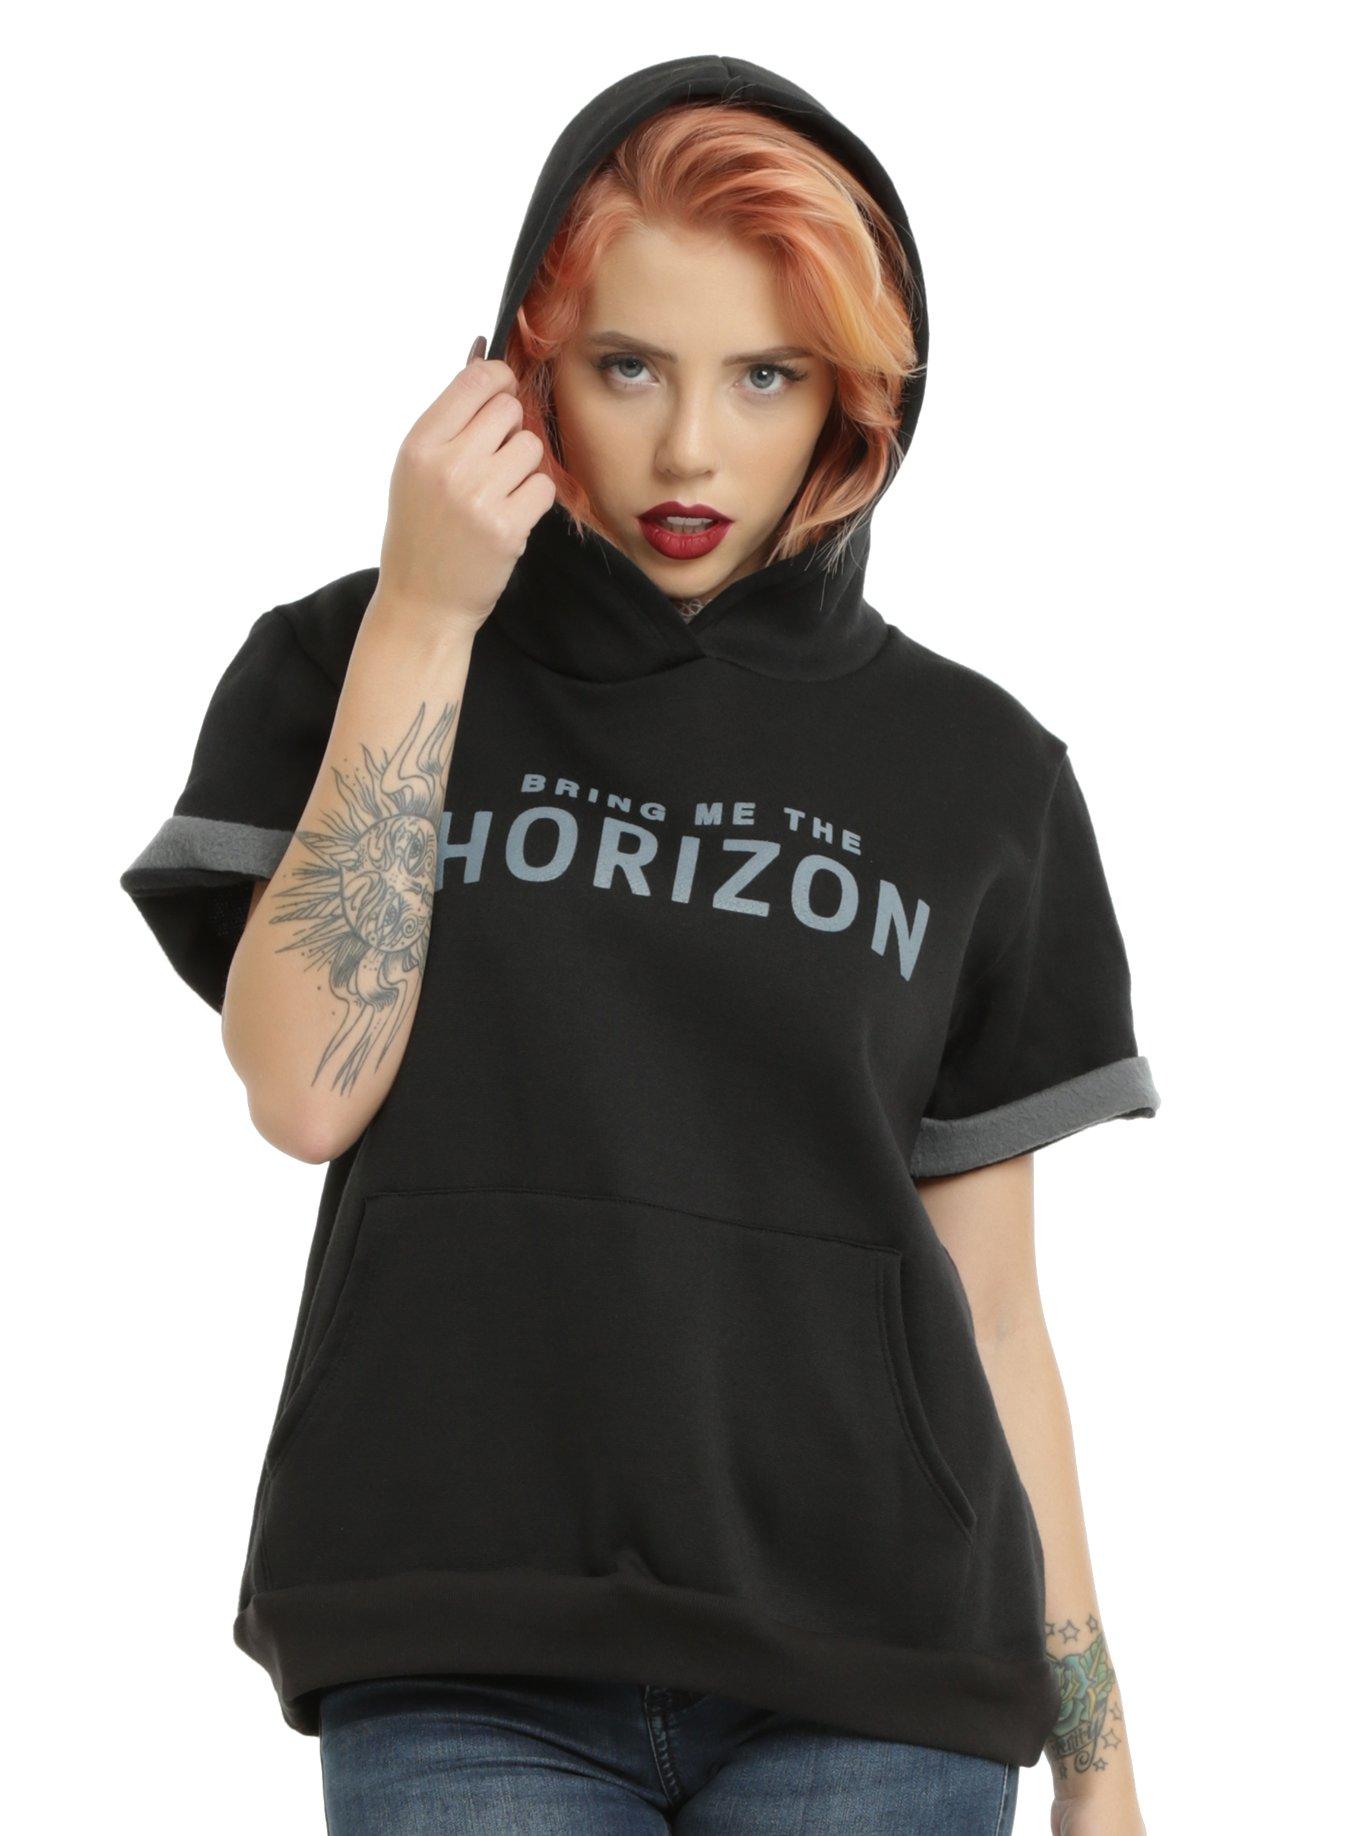 Bring Me The Horizon Doomed Sweatshirt